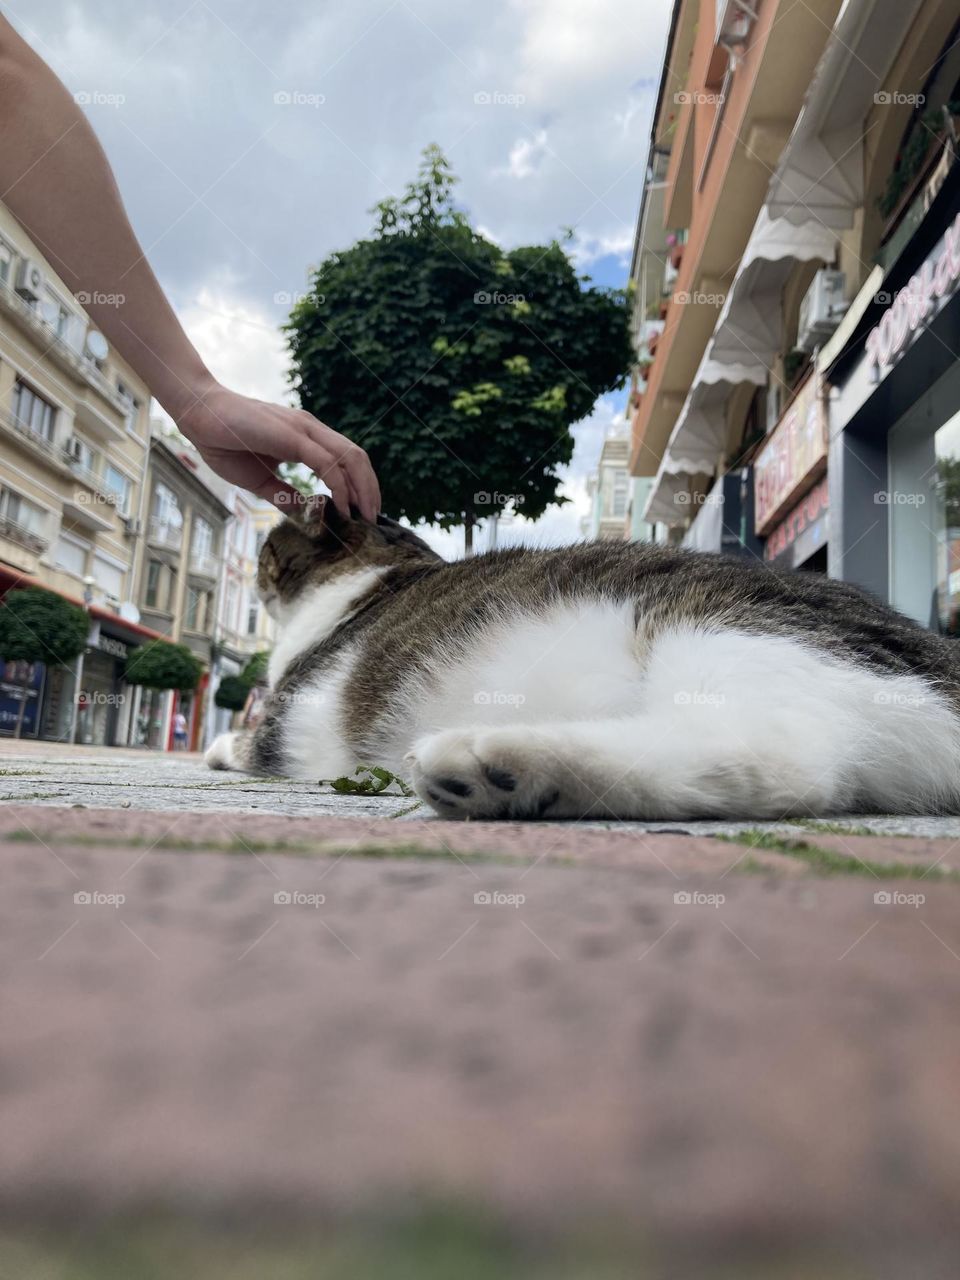 Petting the street cat 